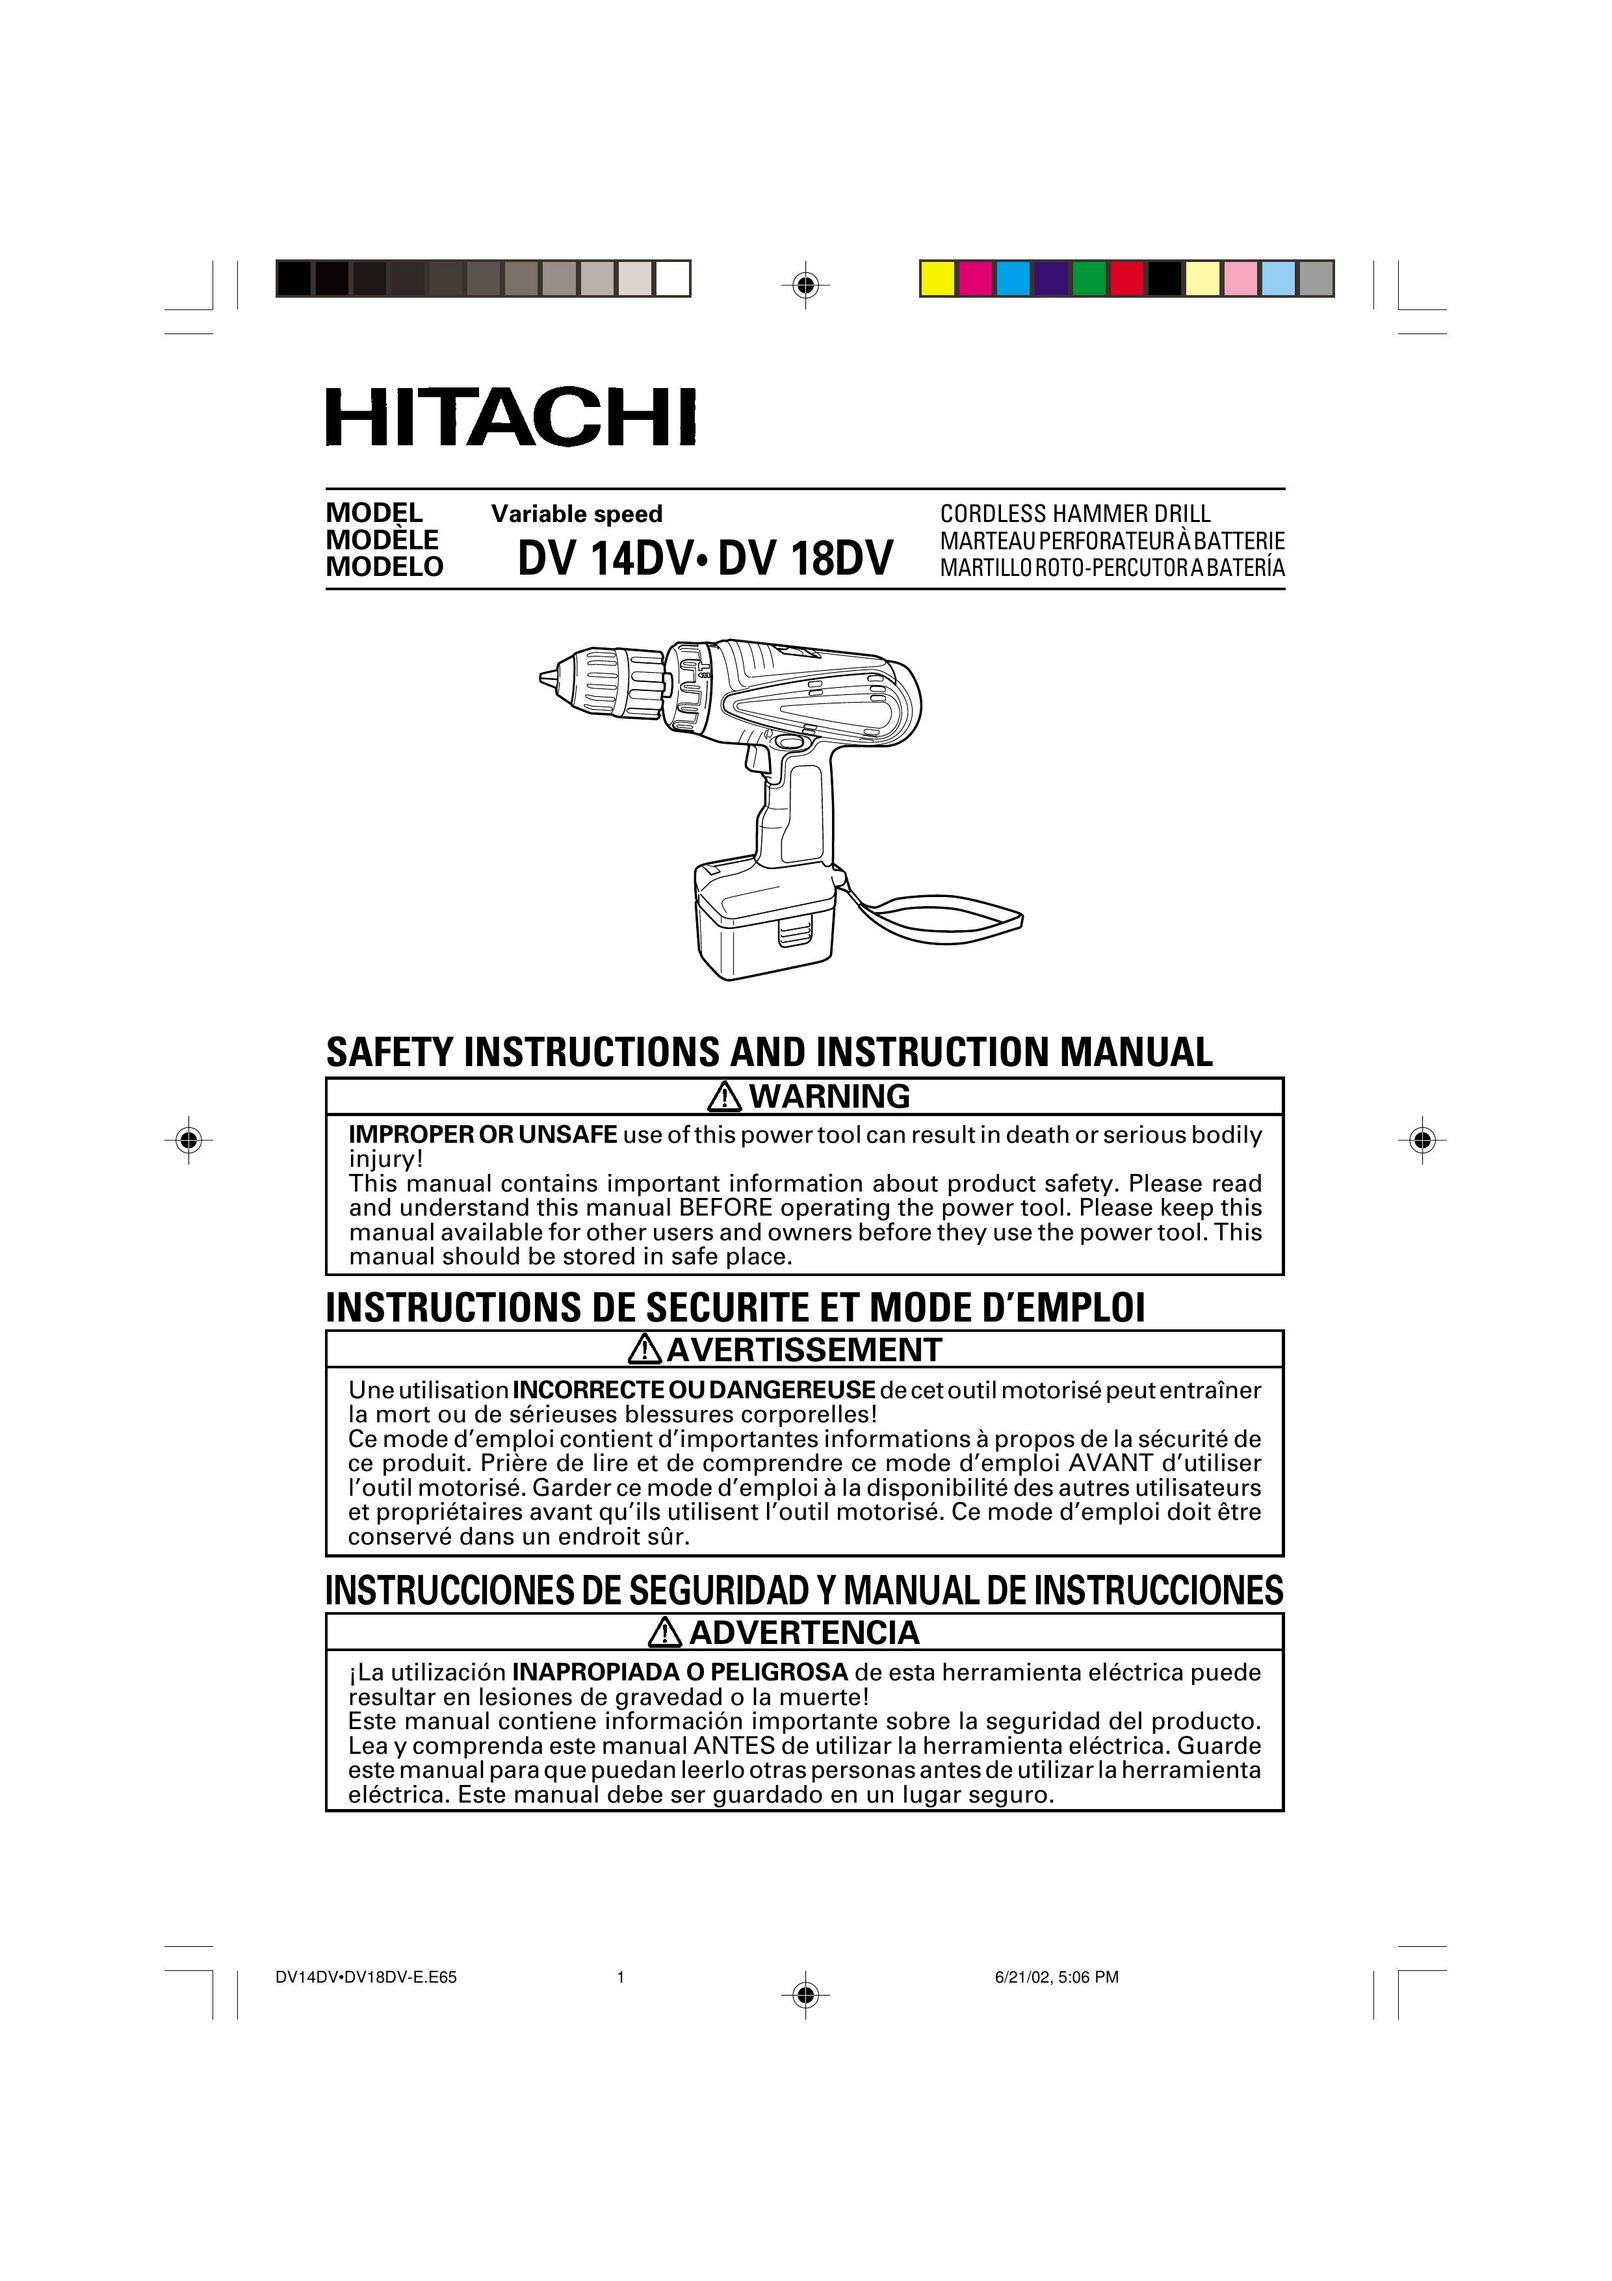 Hitachi DV 18DV Drill User Manual